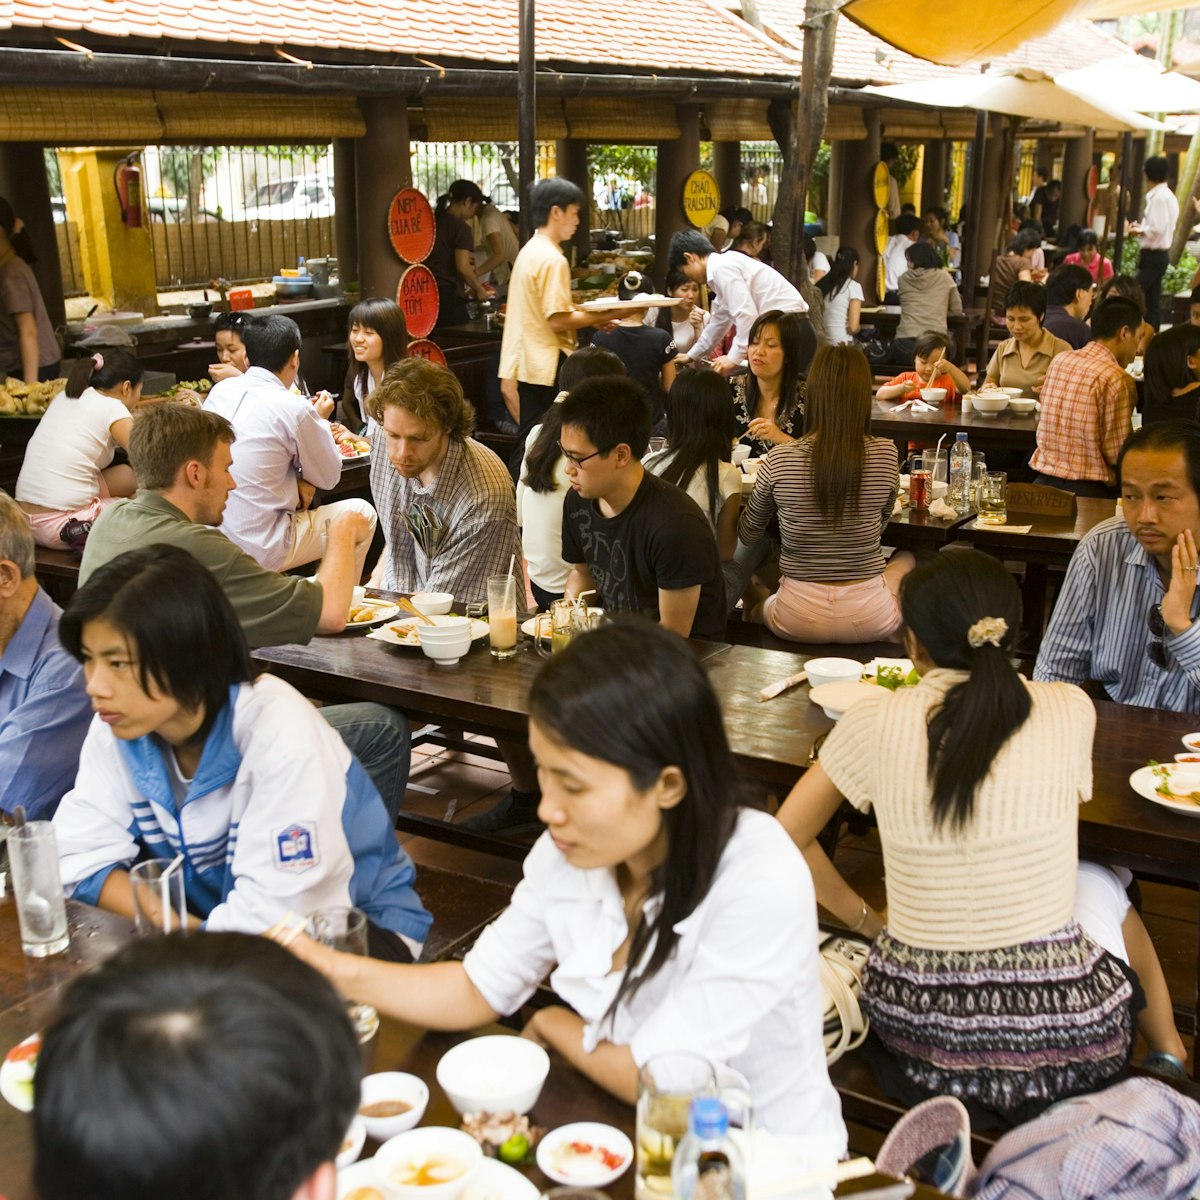 Diners at Quan An Ngan courtyard restaurant, French Quarter.